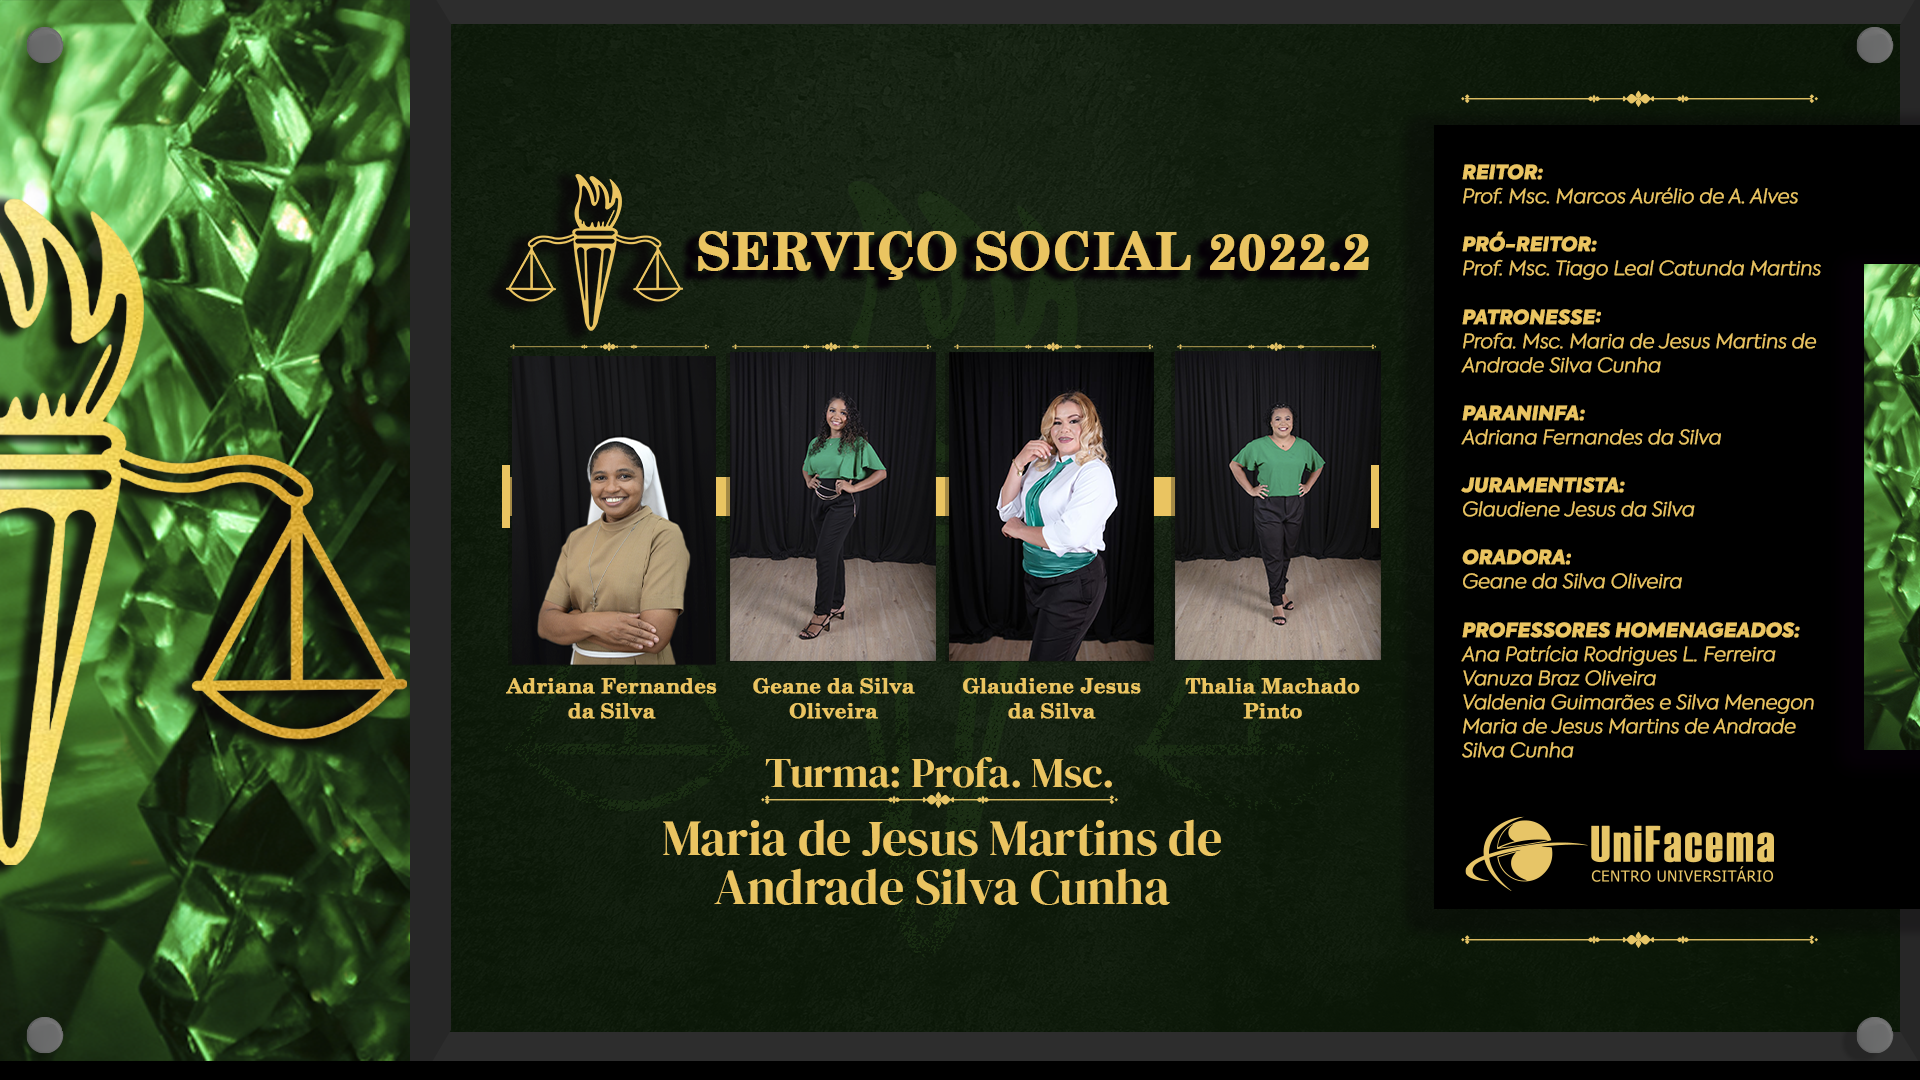 TURMA PROF. MSC. MARIA DE JESUS MARTINS DE ANDRADE SILVA CUNHA